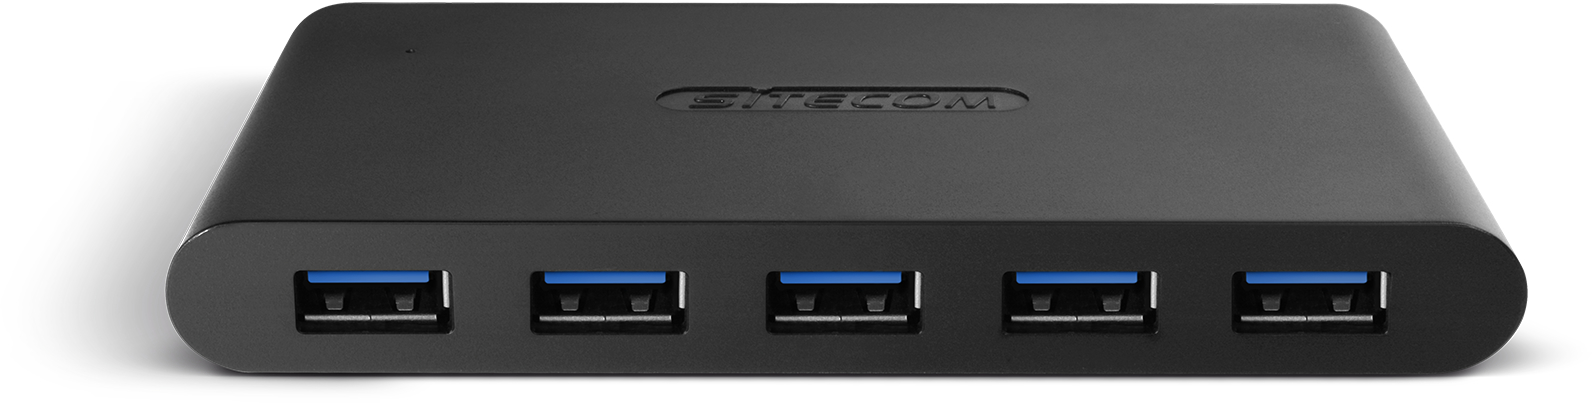 SITECOM USB 3.0 Hub 7 Port CN-084 Incl. Power adapter